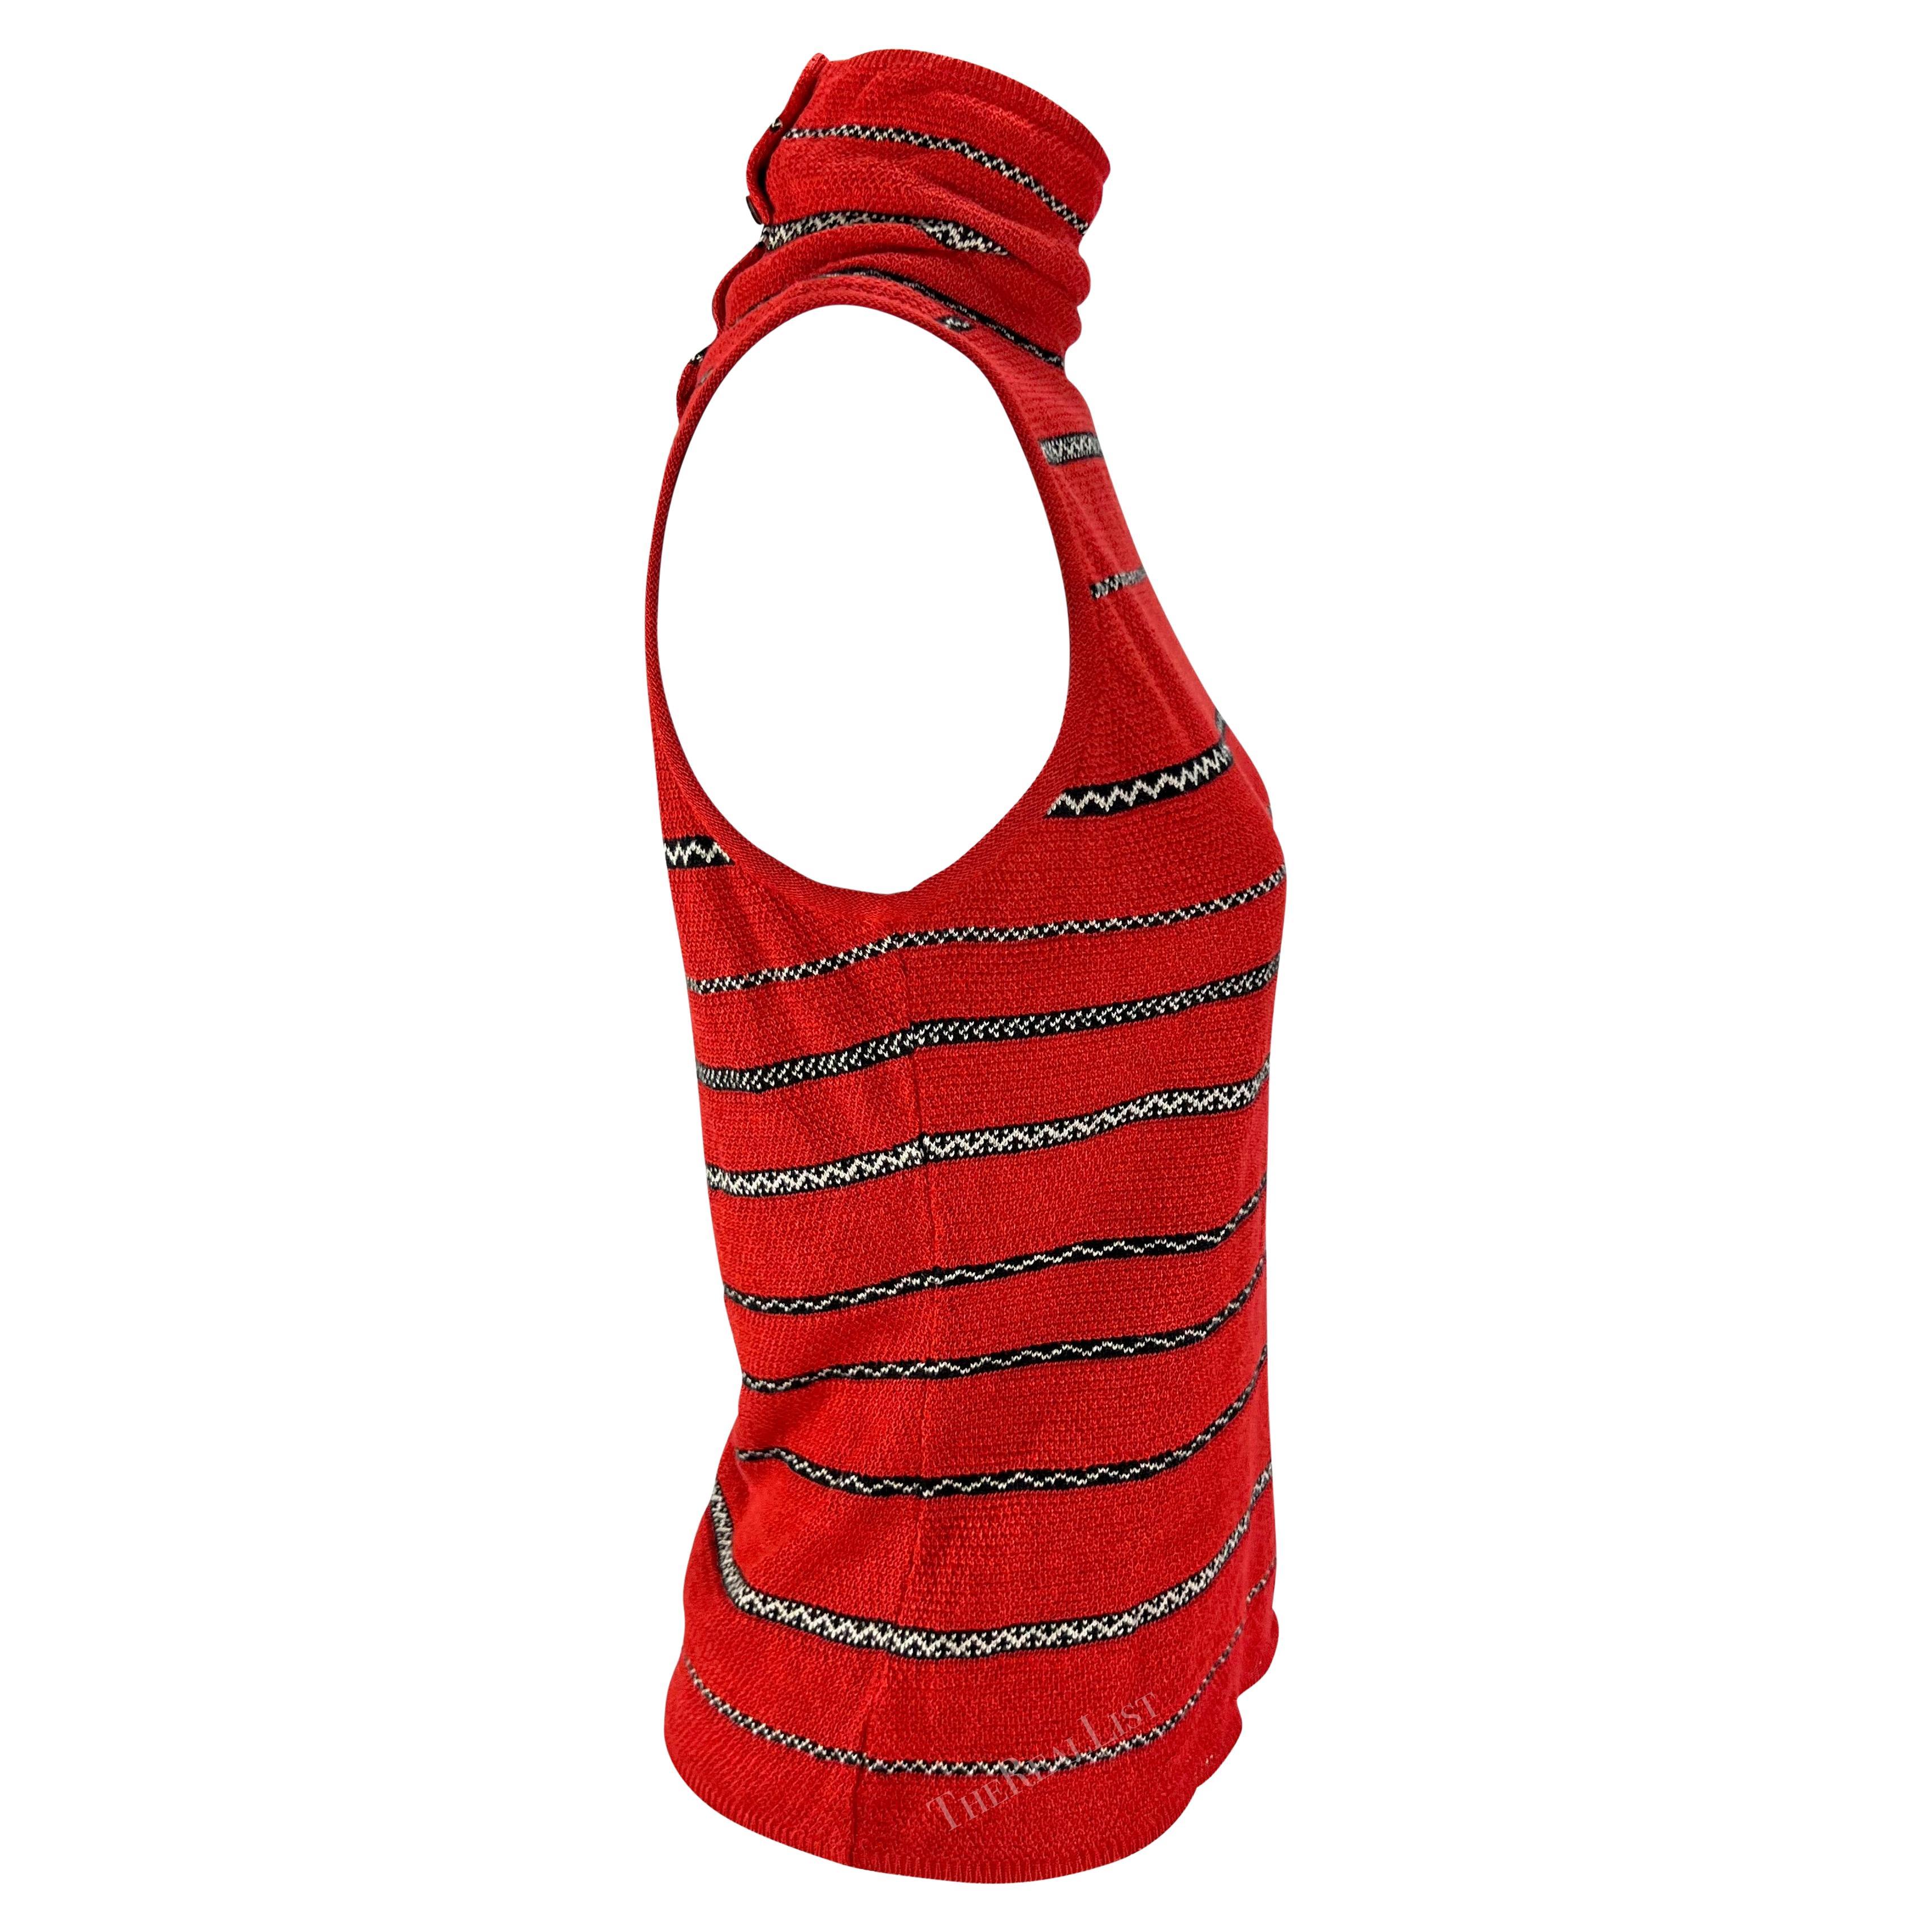 S/S 1997 Ralph Lauren Runway Ad Stretch Knit Linen Red Stripe Mock Neck Top For Sale 4